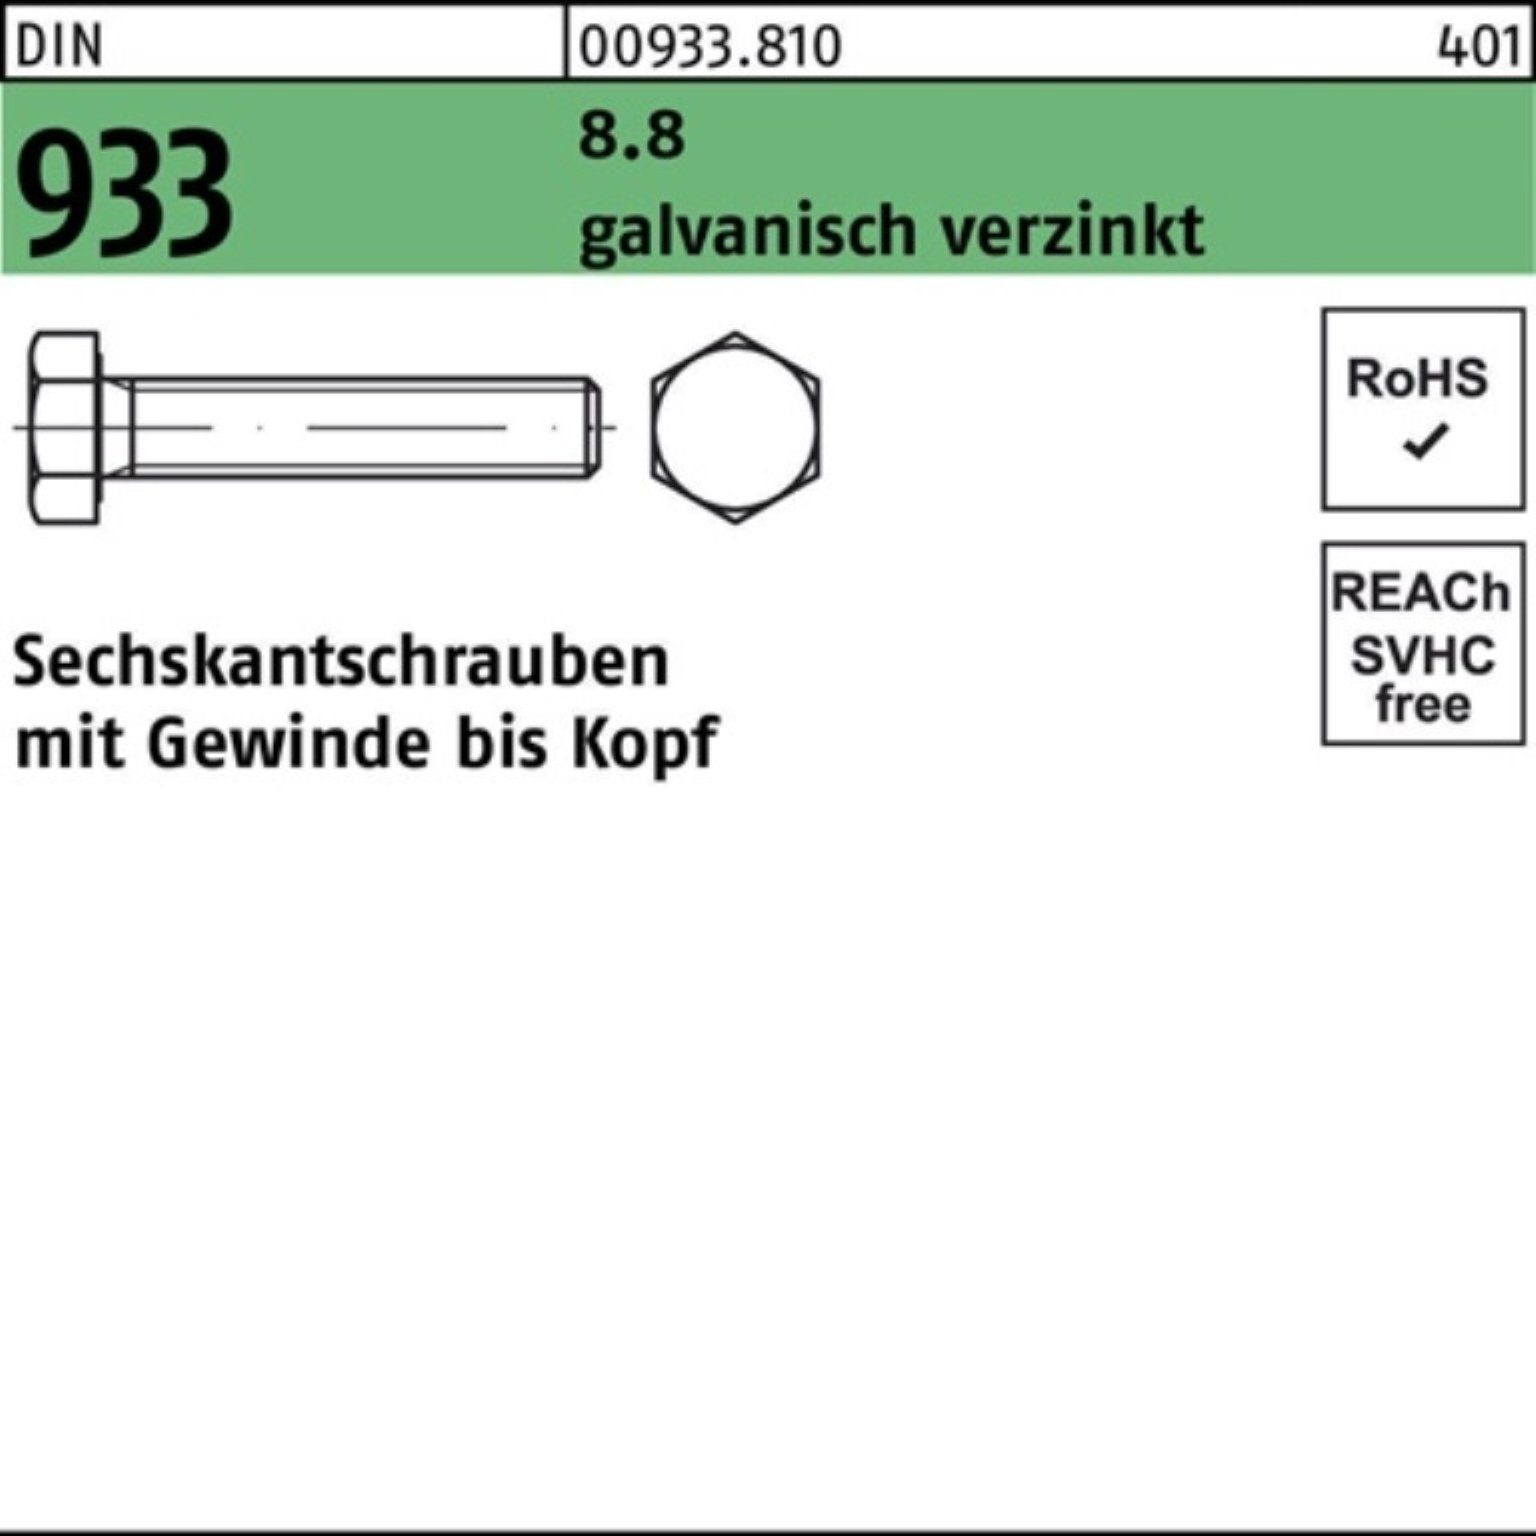 Sechskantschraube Pack 500 Sechskantschraube Stü M5x 12 VG 8.8 933 DIN Reyher galv.verz. 500er